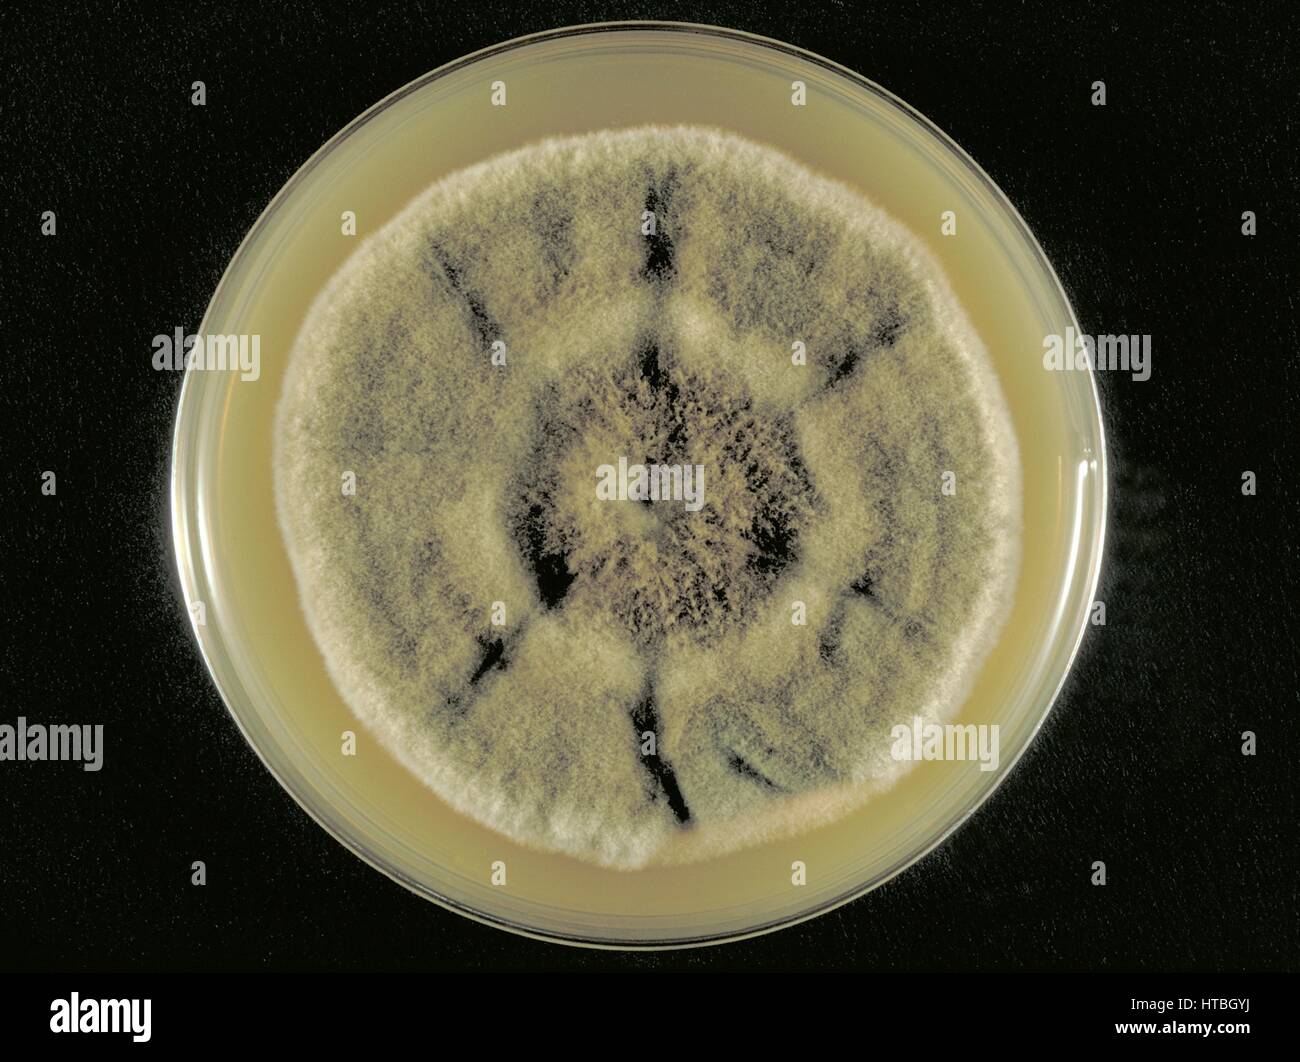 Sabouraud's dextrose agar plate culture growing the fungus Curvularia harveyi, 1973. Image courtesy CDC/Dr. William Kaplan. Stock Photo